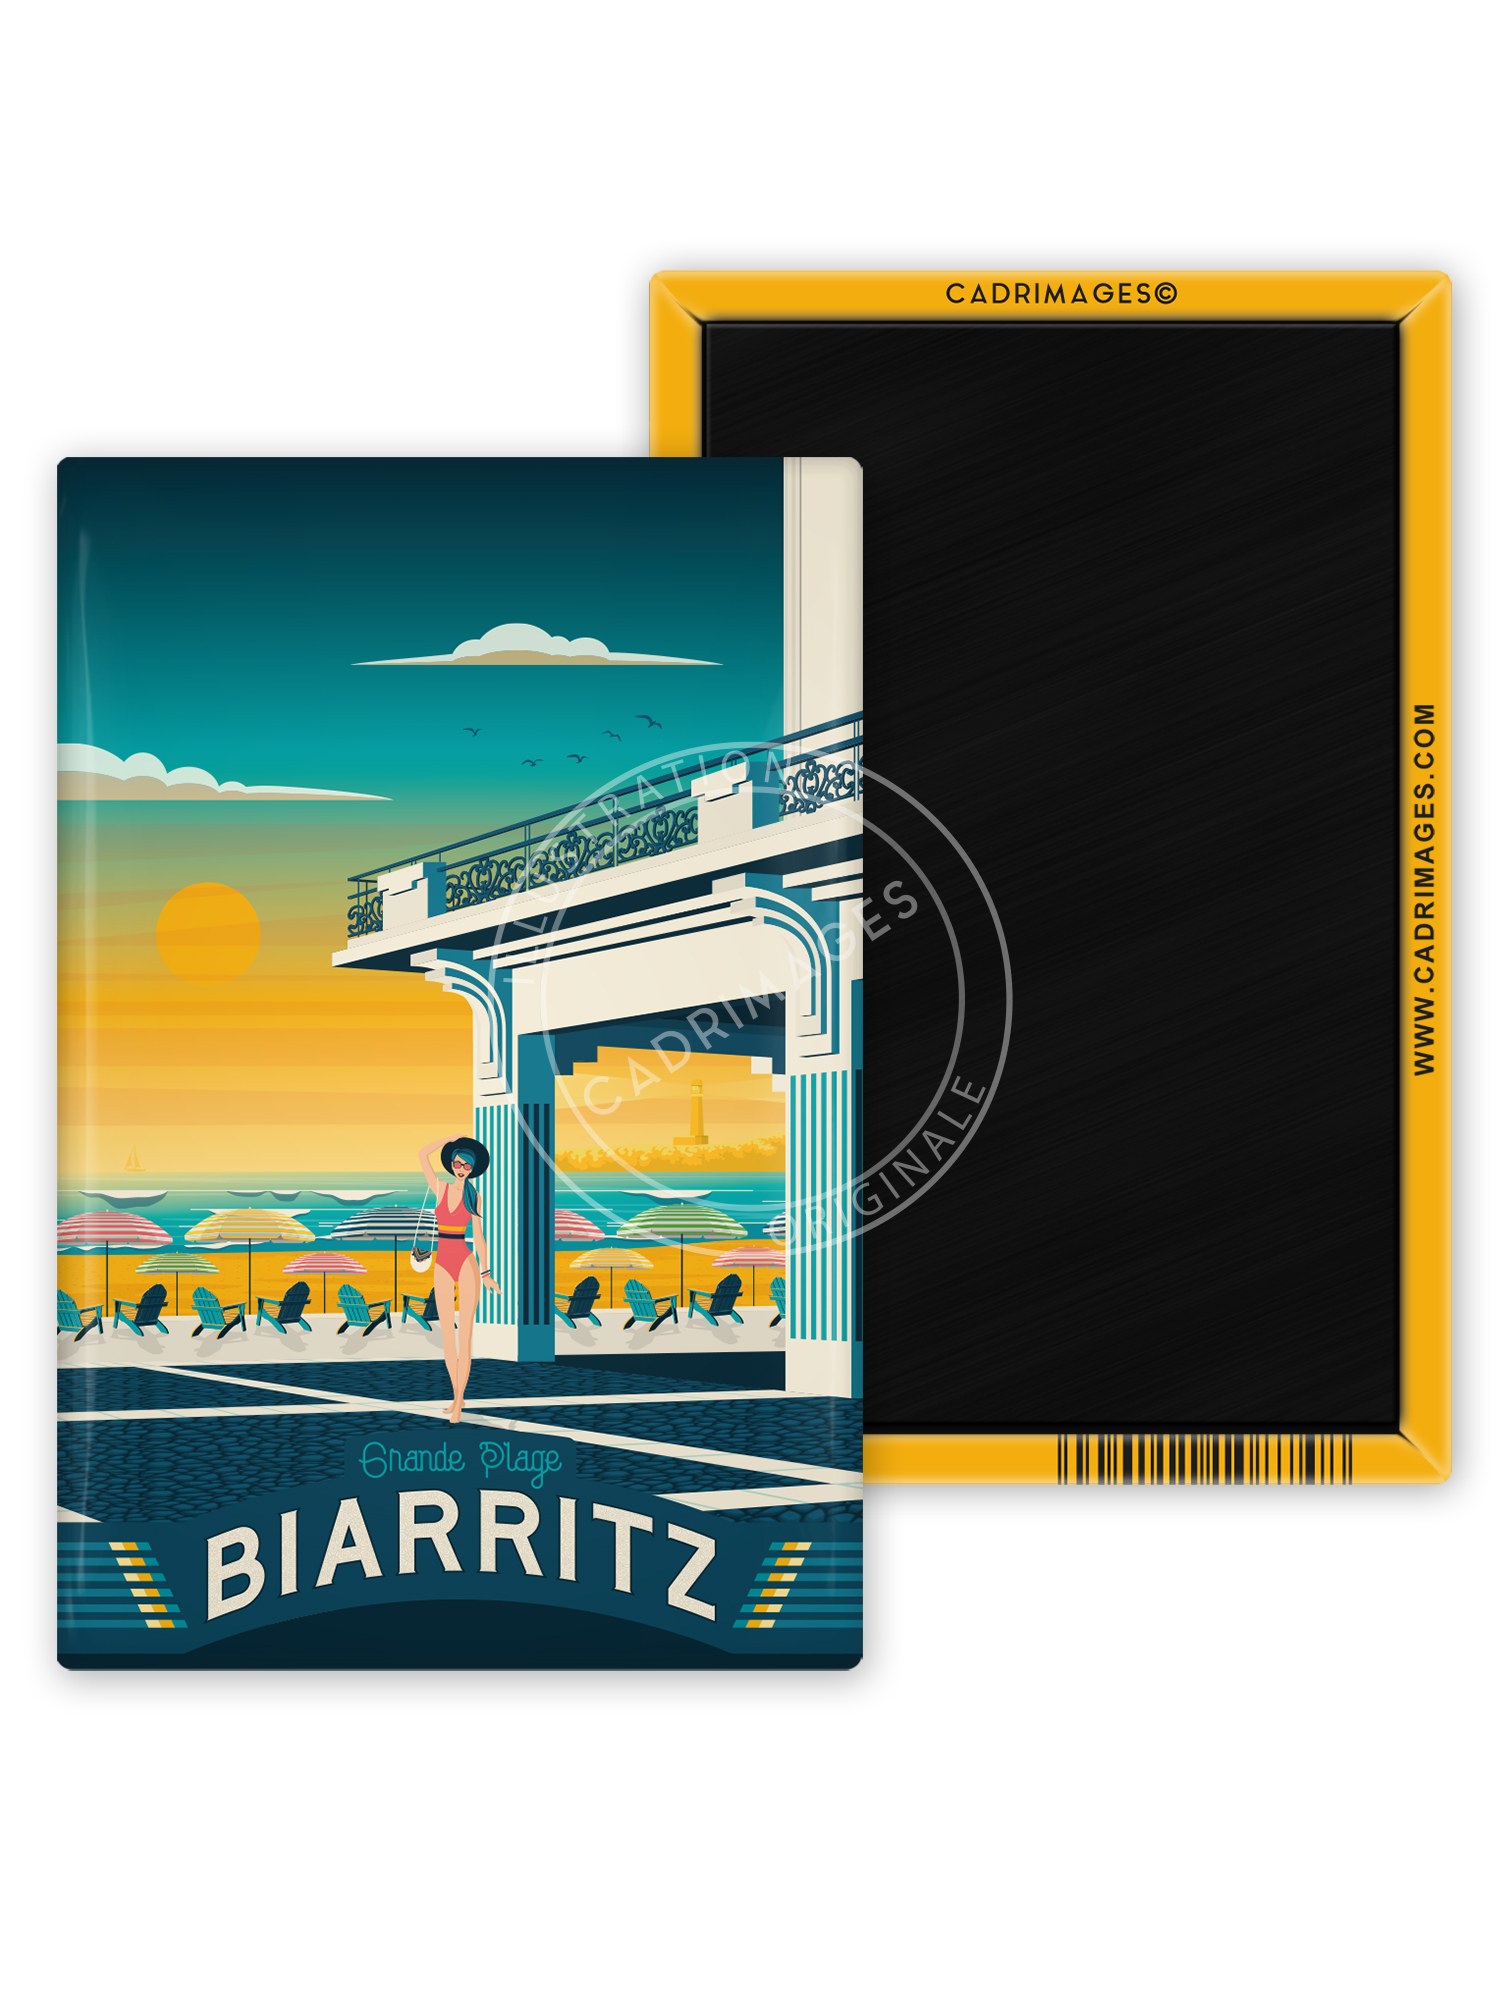 Magnet de Biarritz, le casino